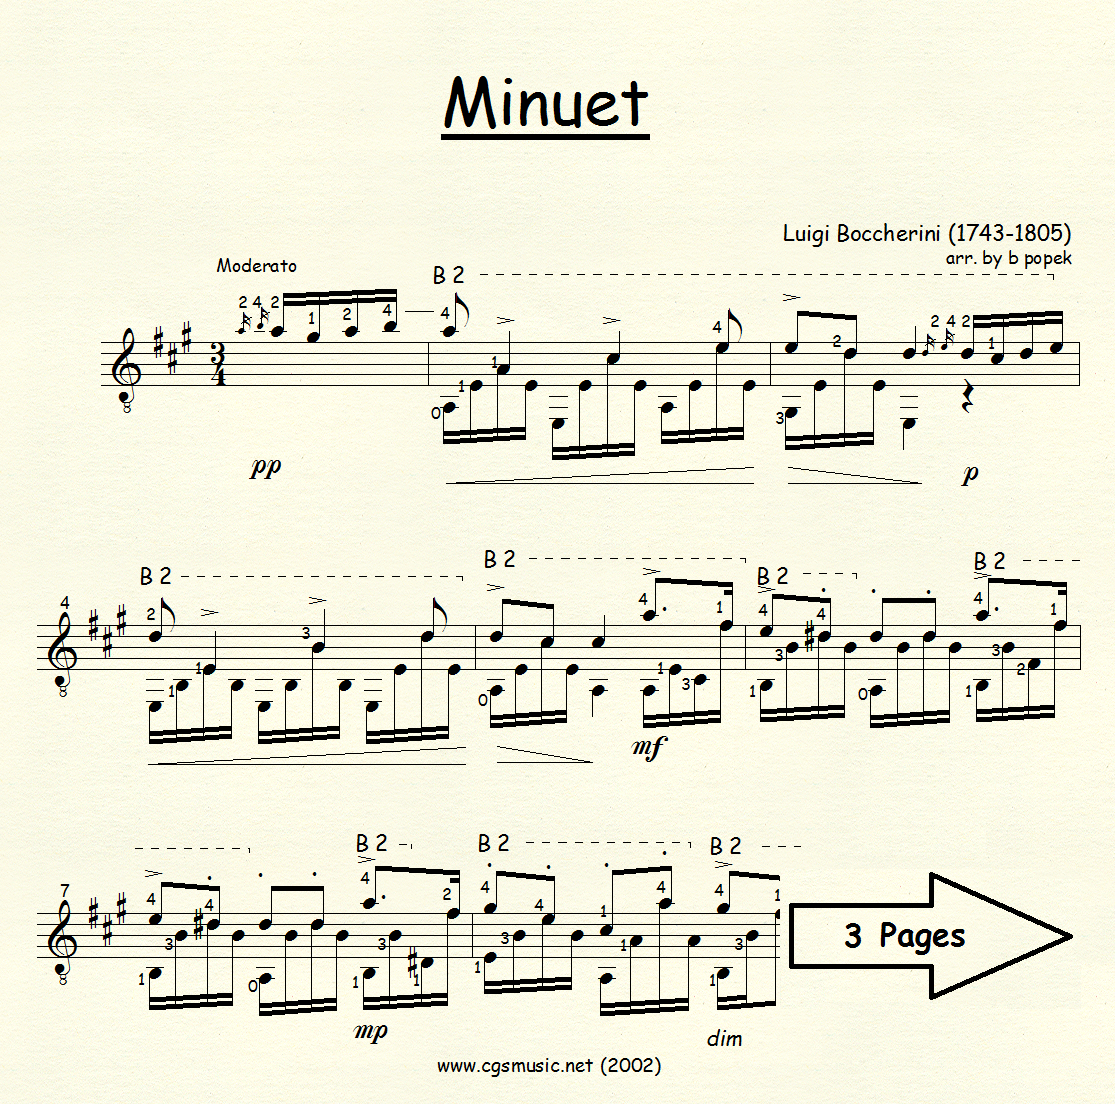 Minuet (Boccherini) for Classical Guitar in Standard Notation